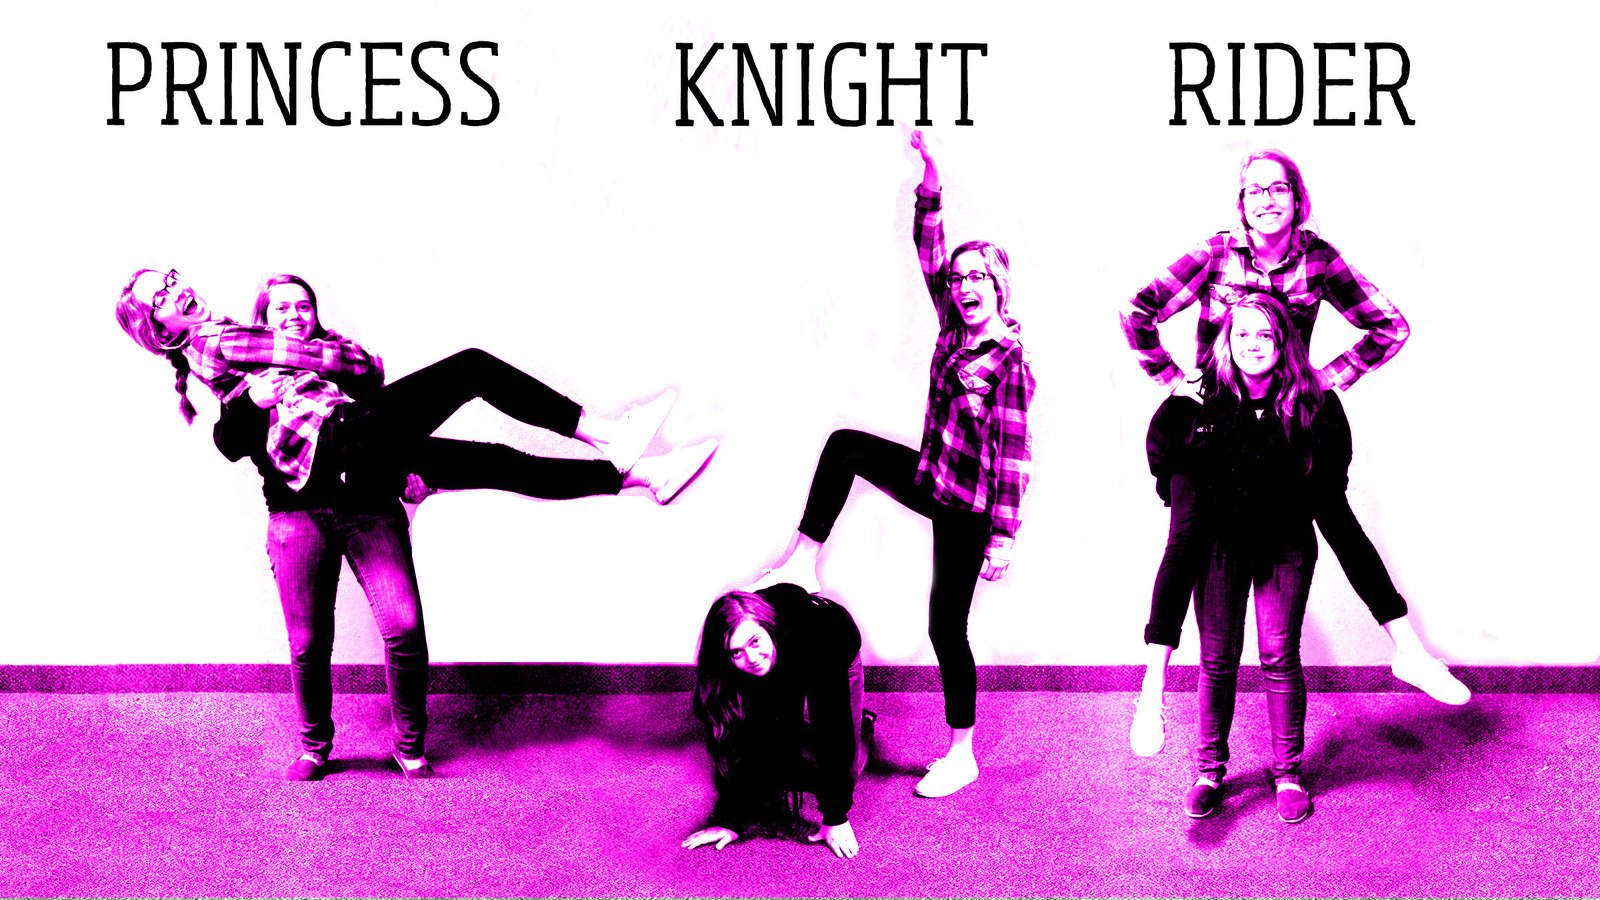 Princess Knight Rider - Youth DownloadsYouth Downloads2400 x 1350